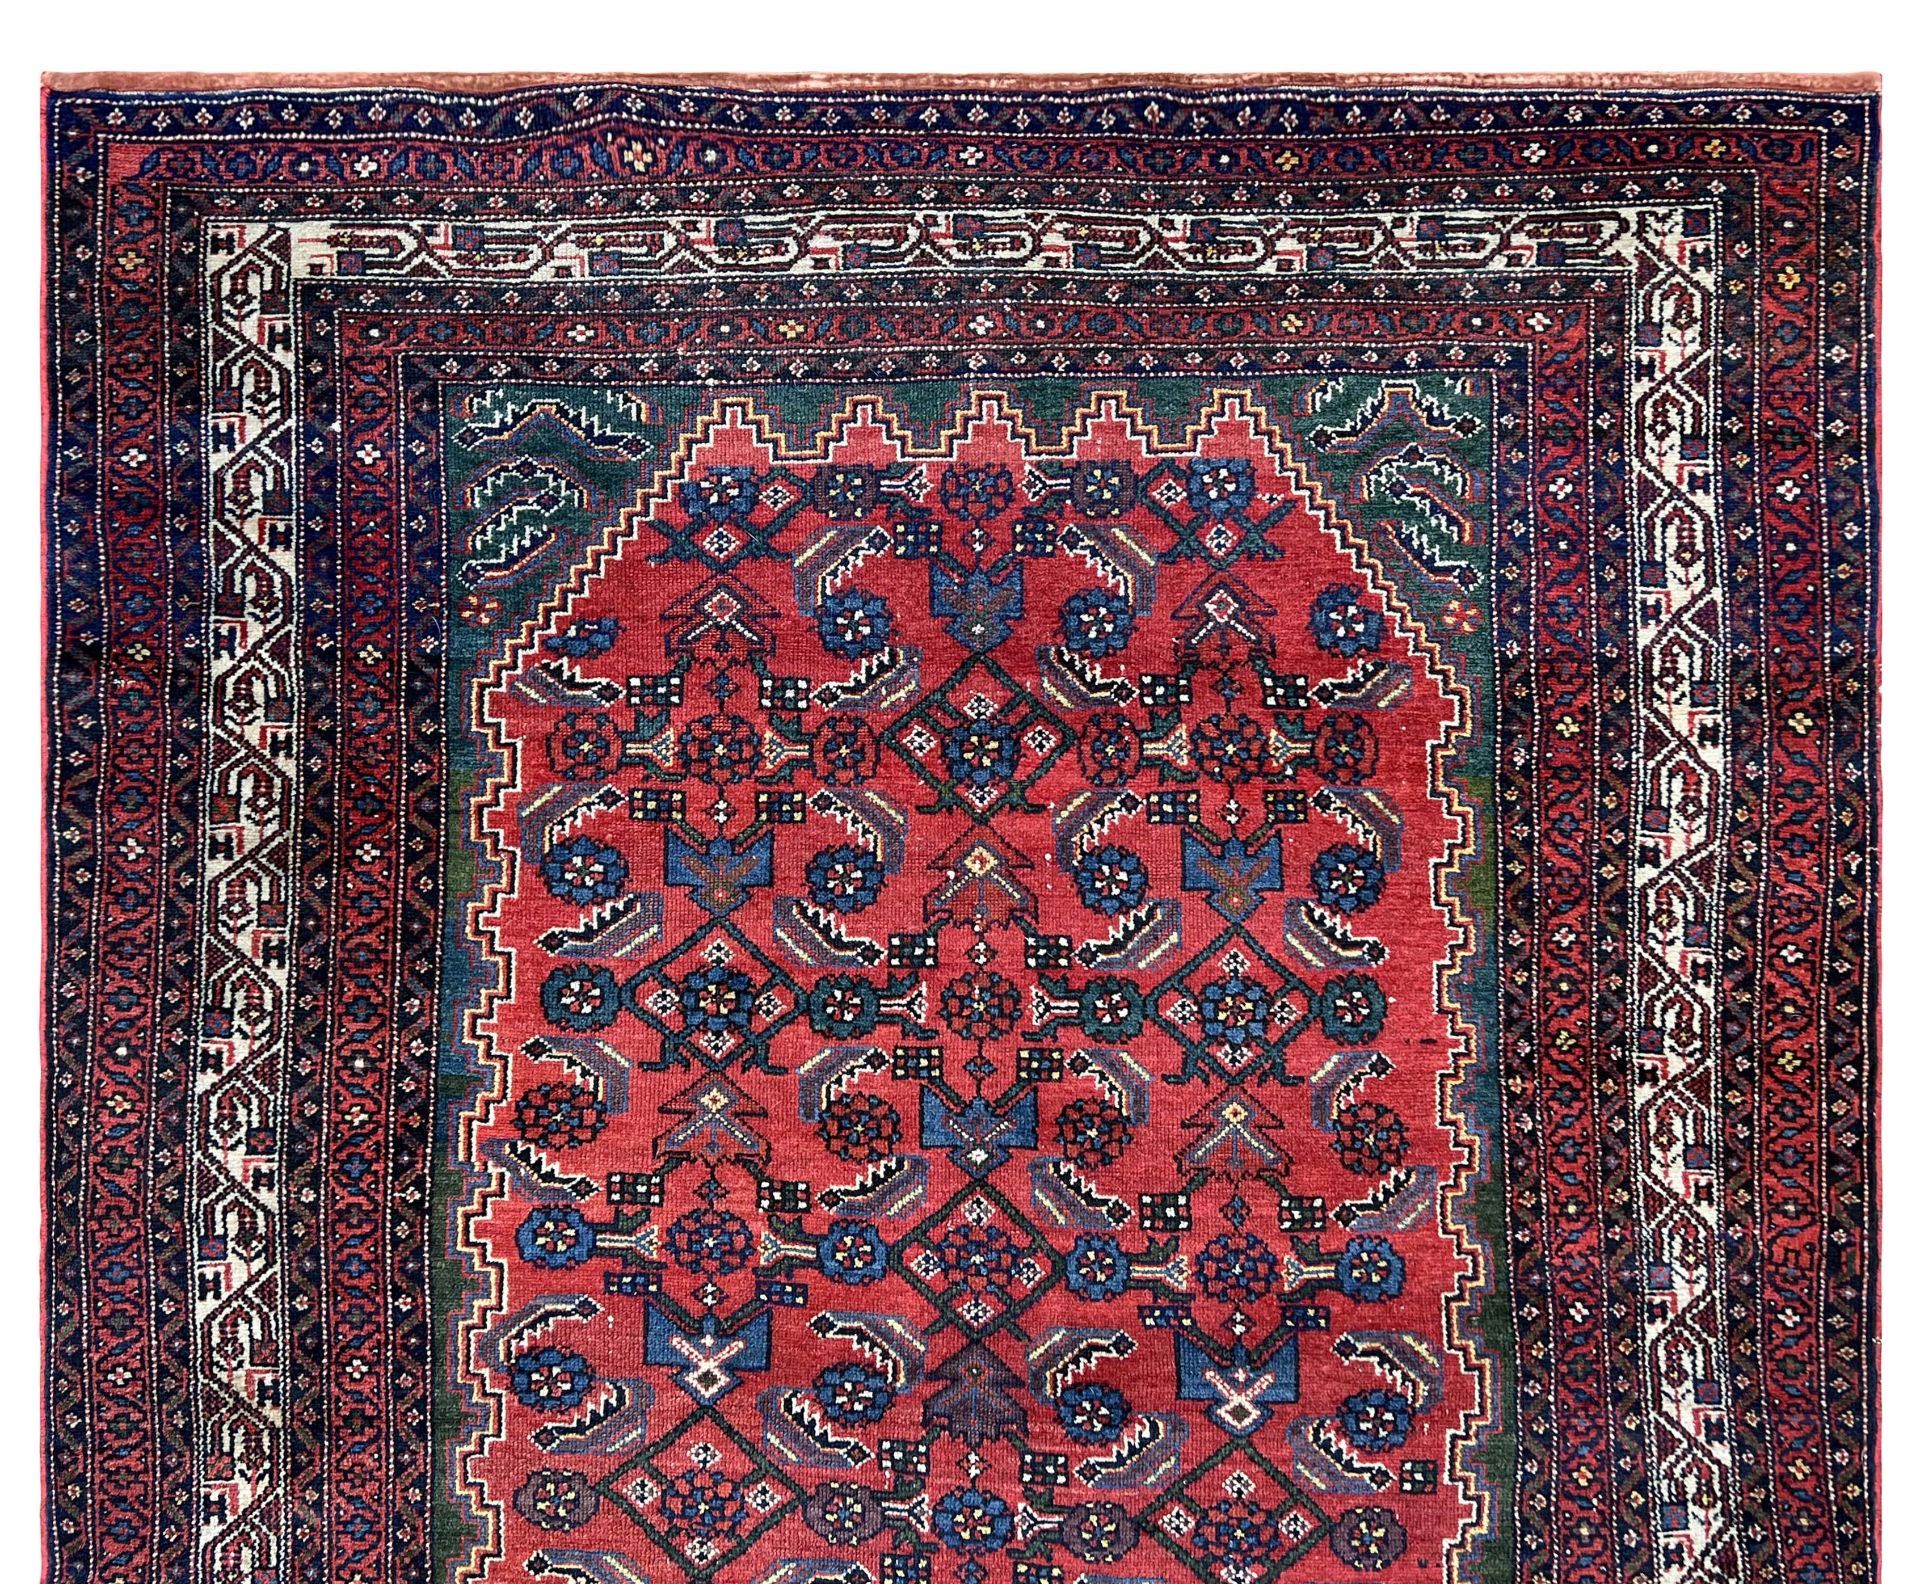 Malay. Fine. Oriental carpet. Circa 1910. - Image 2 of 8